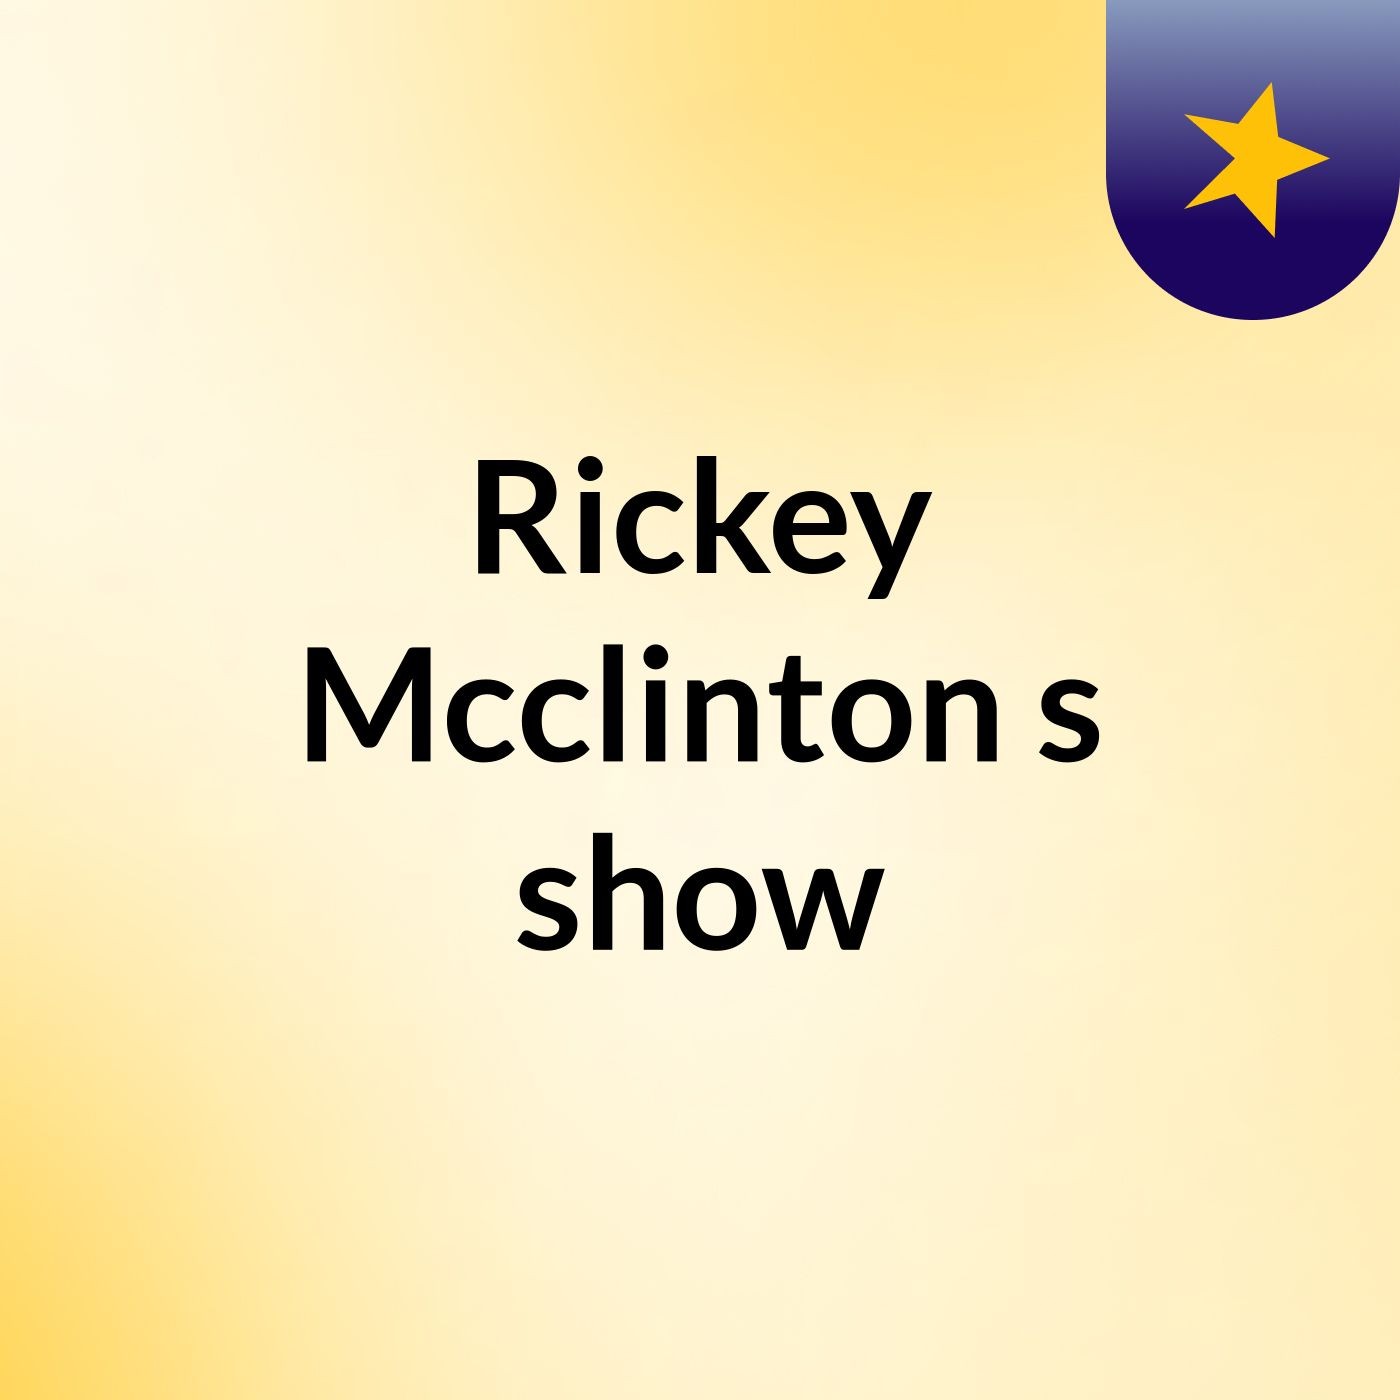 Episode 2 - Rickey Mcclinton's show